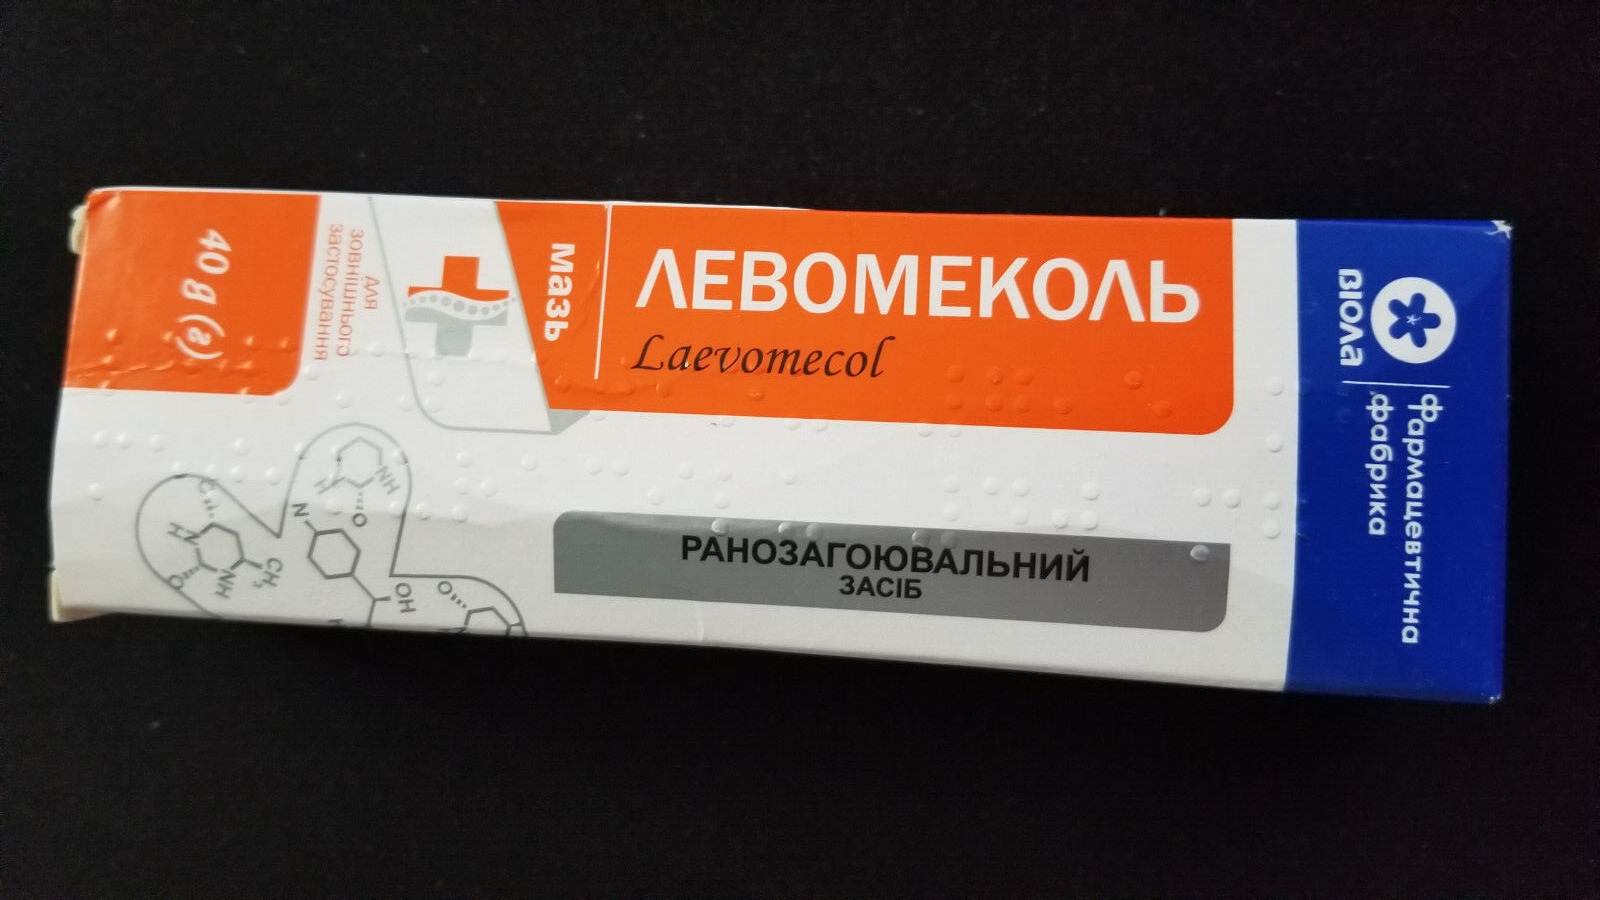 Levomeсol Levomekol First Aid Treatment Purulent Wound Skin Care Clean body 40g